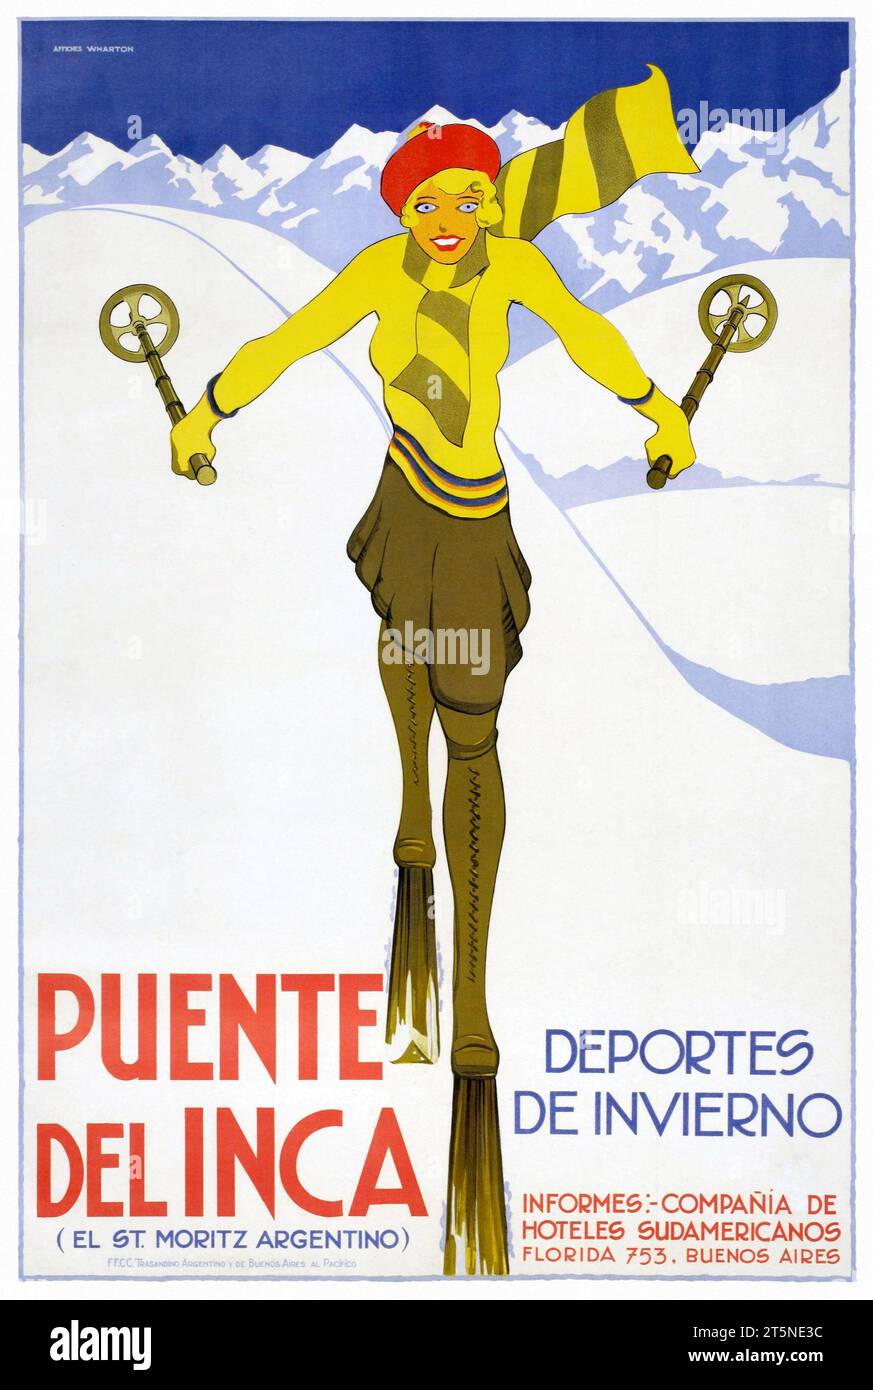 Puente del Inca. Deportes de invierno von Wharton. Poster veröffentlicht 1930 in Argentinien. Stockfoto